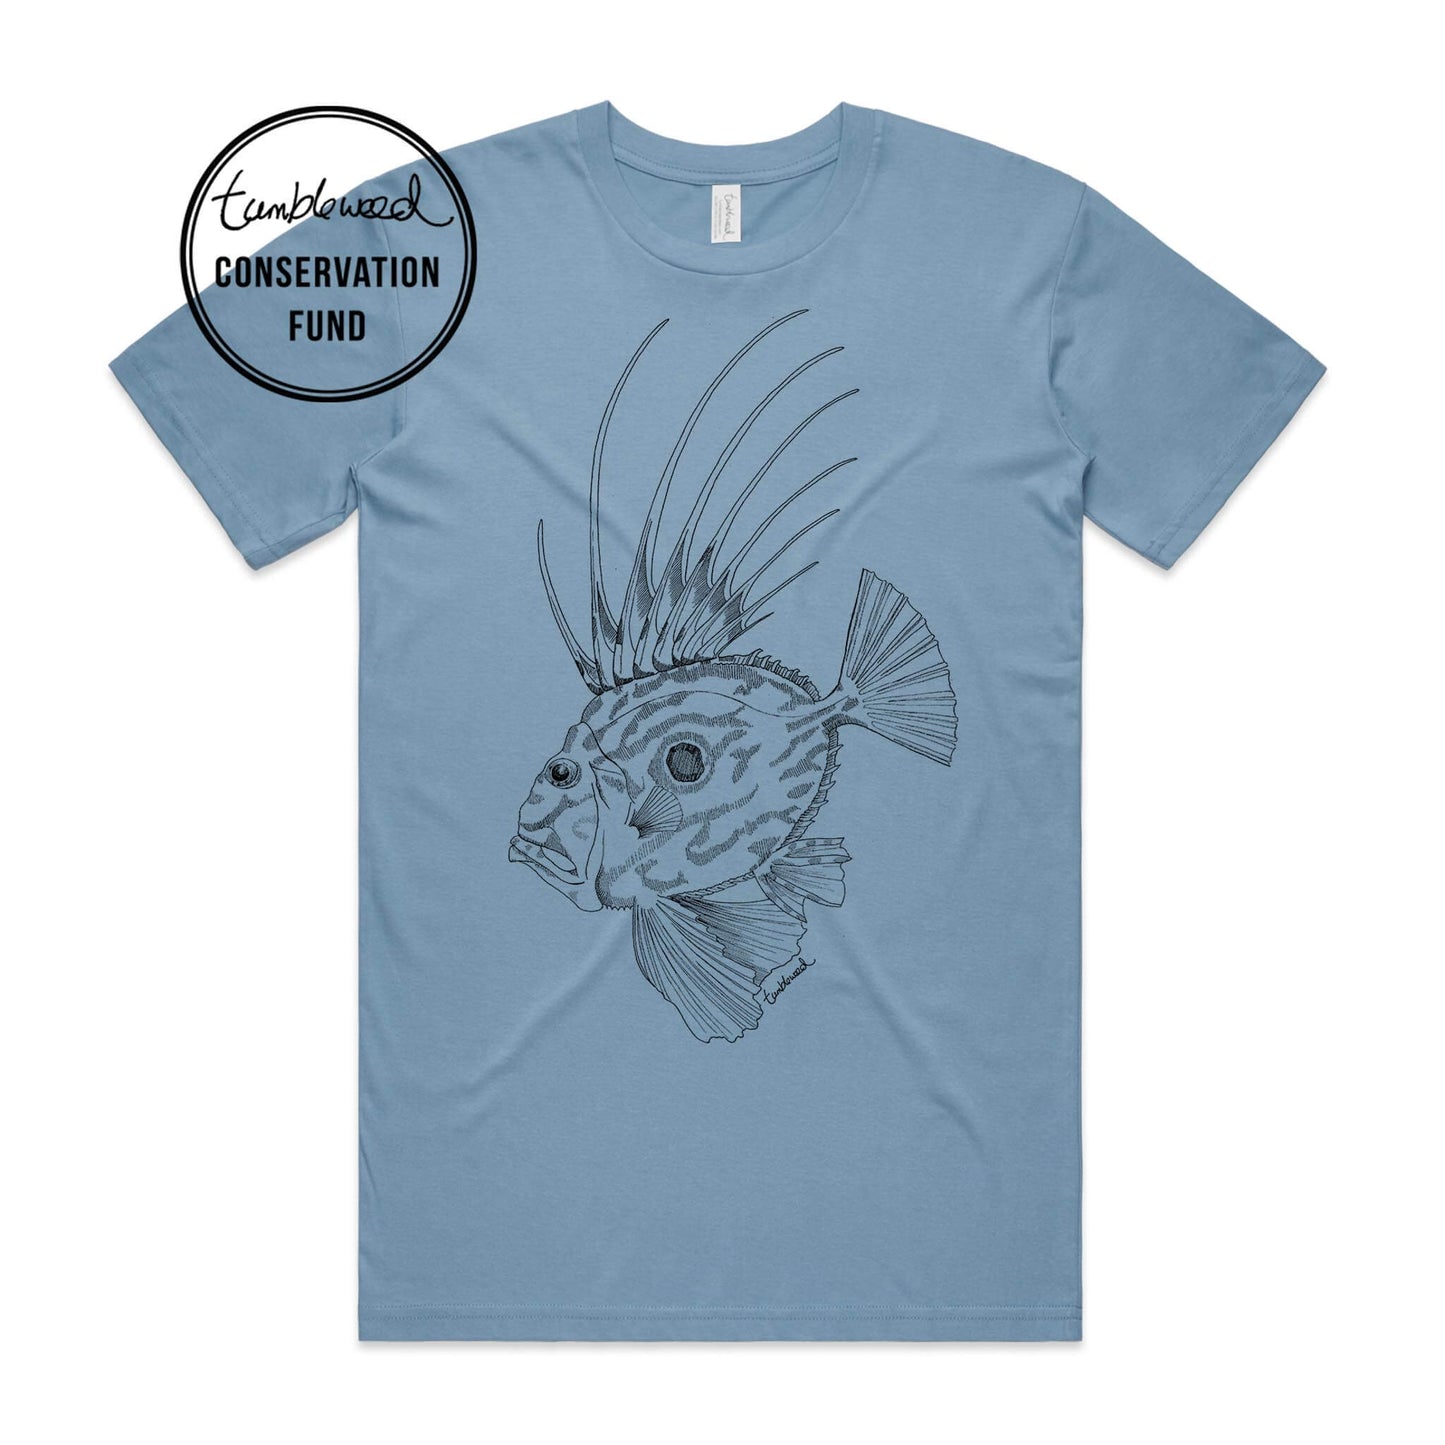 Sage, female t-shirt featuring a screen printed john dory design.